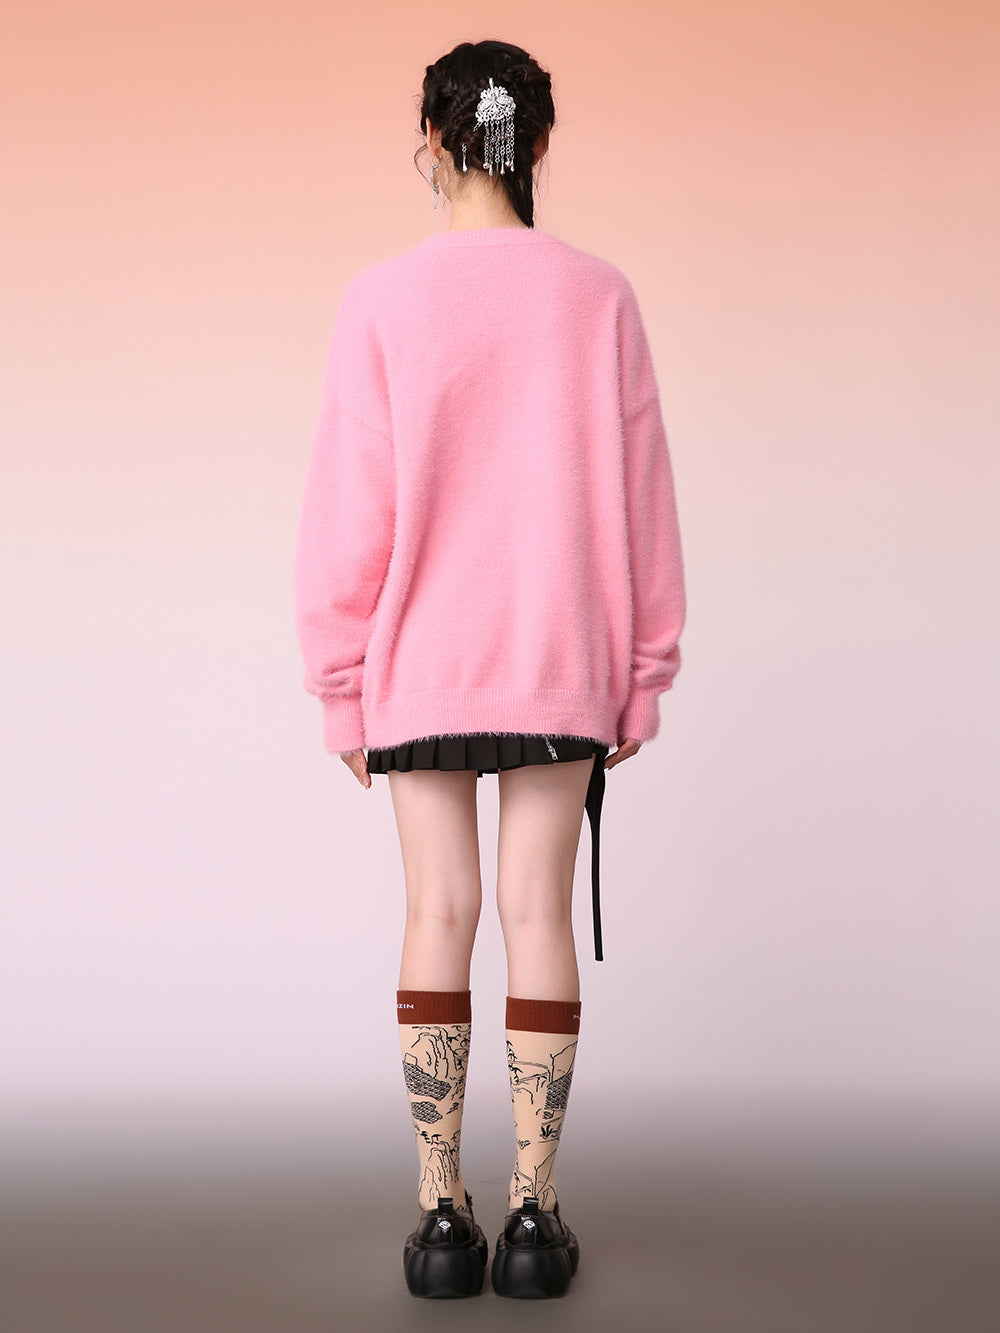 MUKZIN Artist Edition Pink Embroidered Sweater